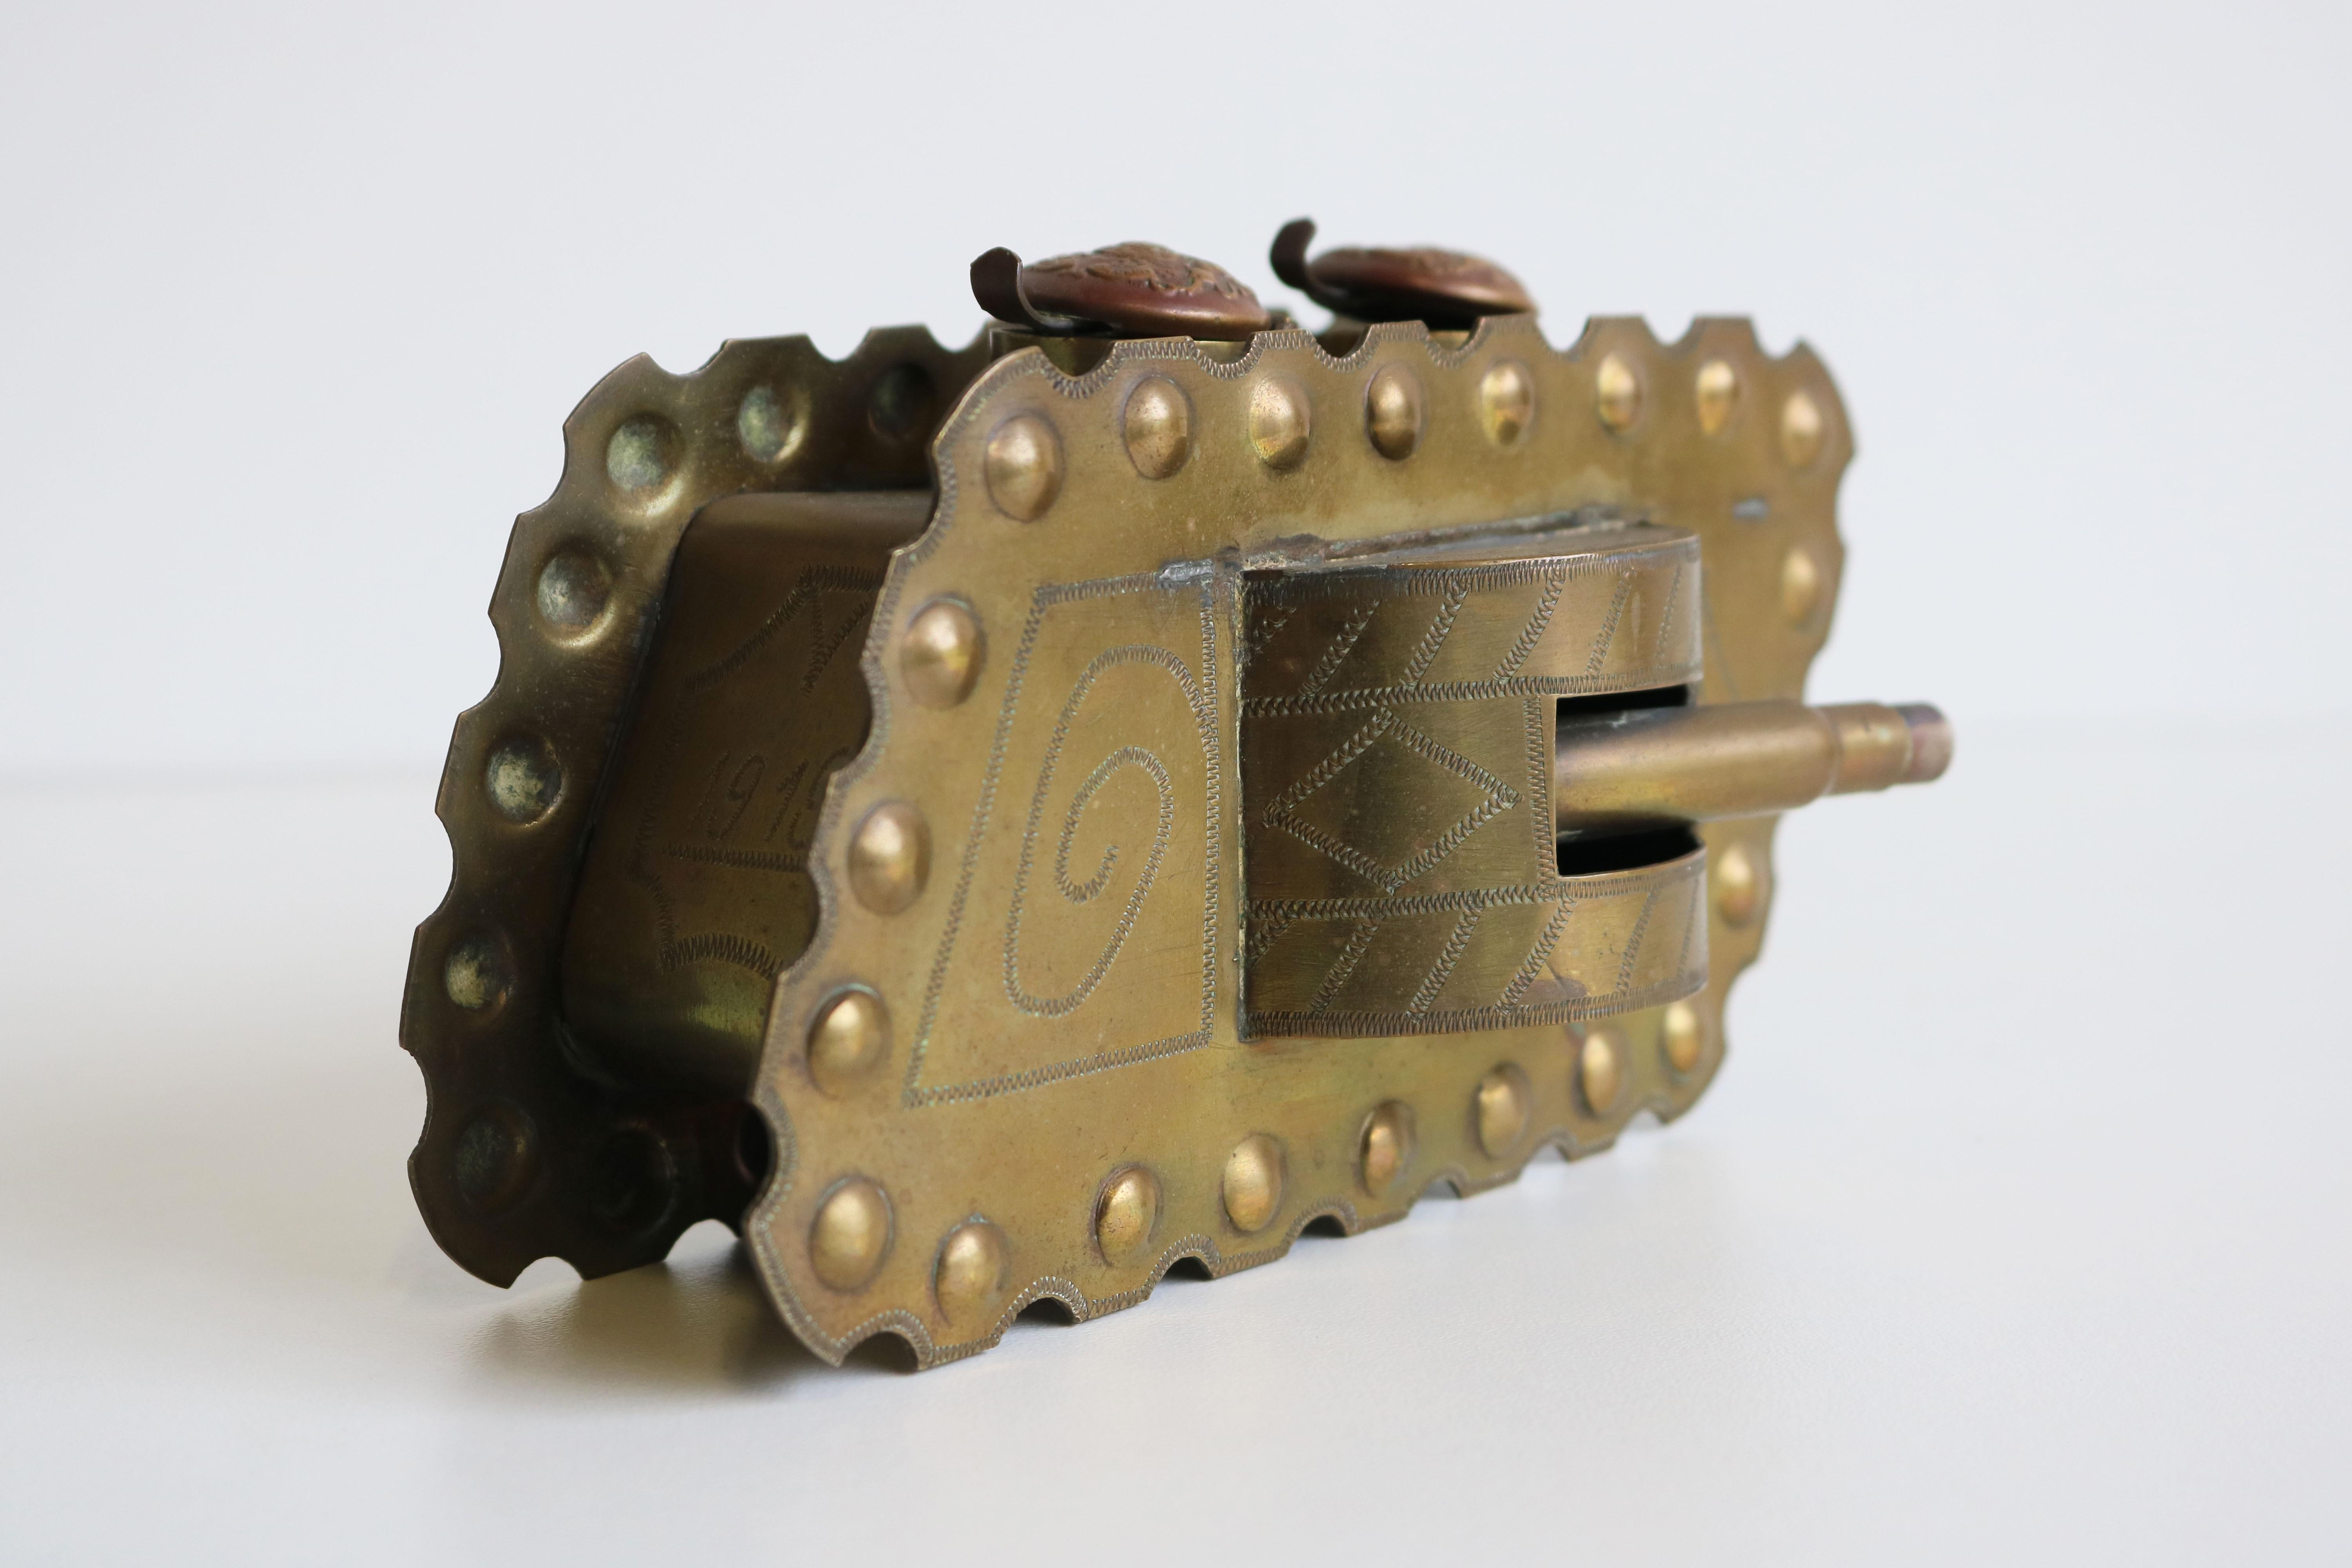 trench art tank